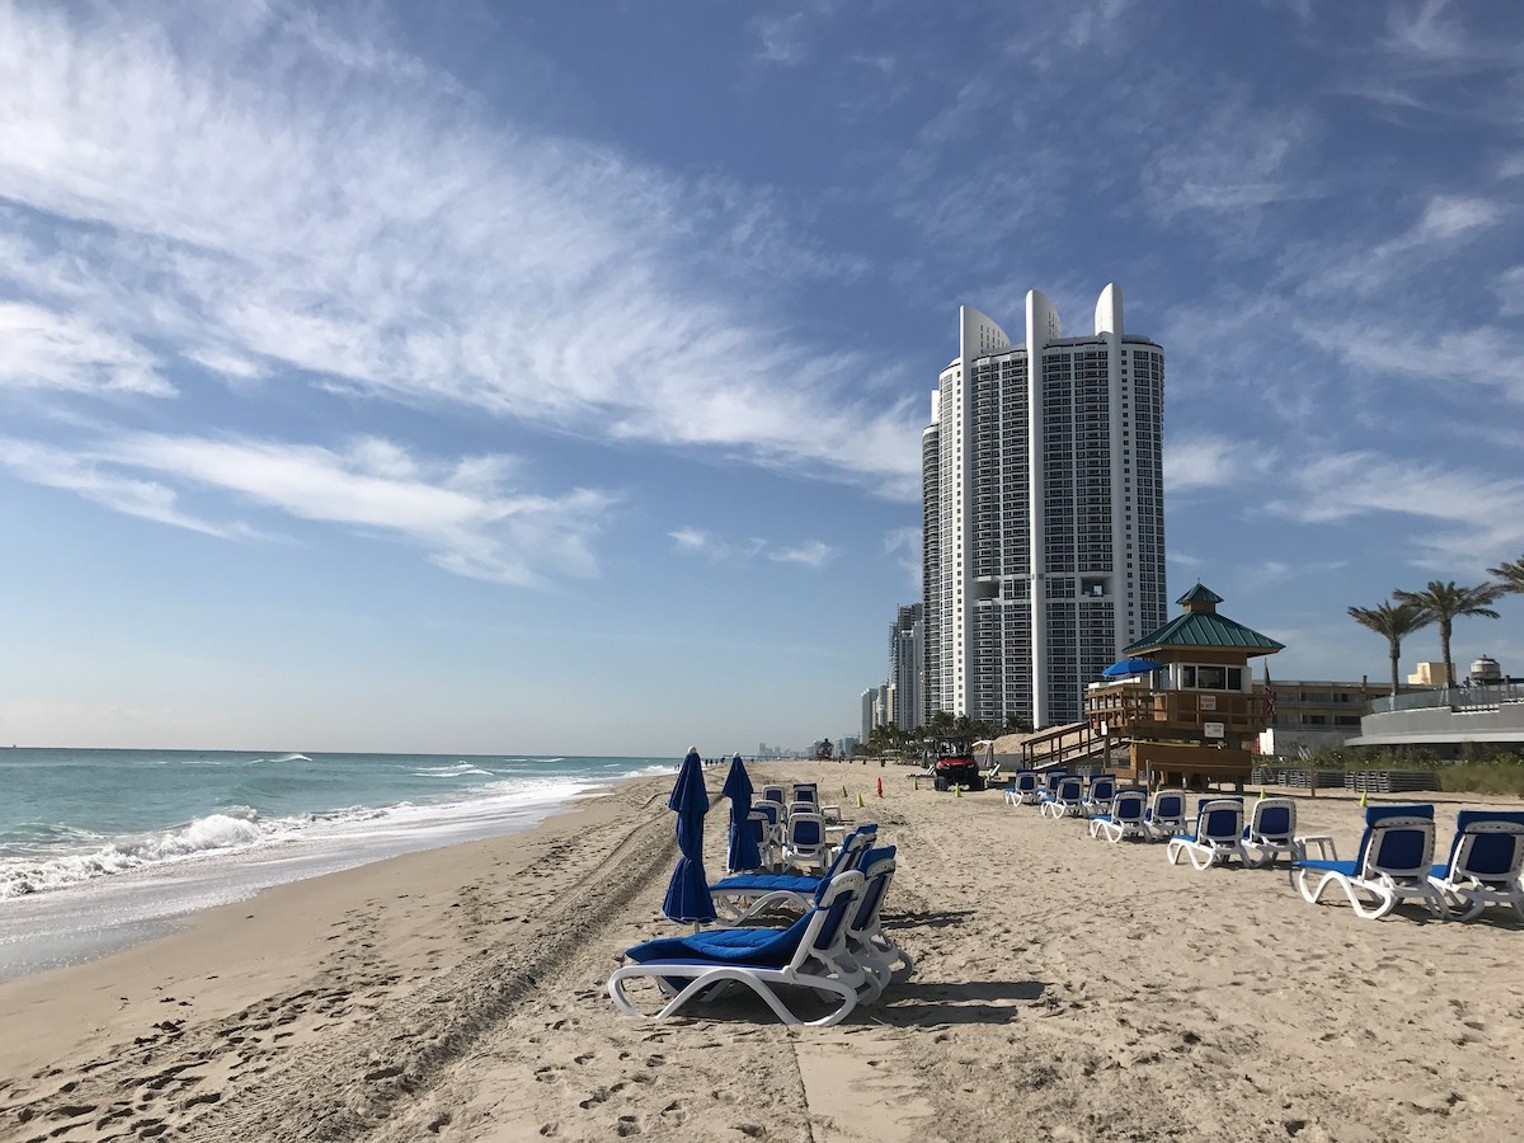 Miami Makes Waves with Epic Miami Swim Week Shows - The Miami Guide